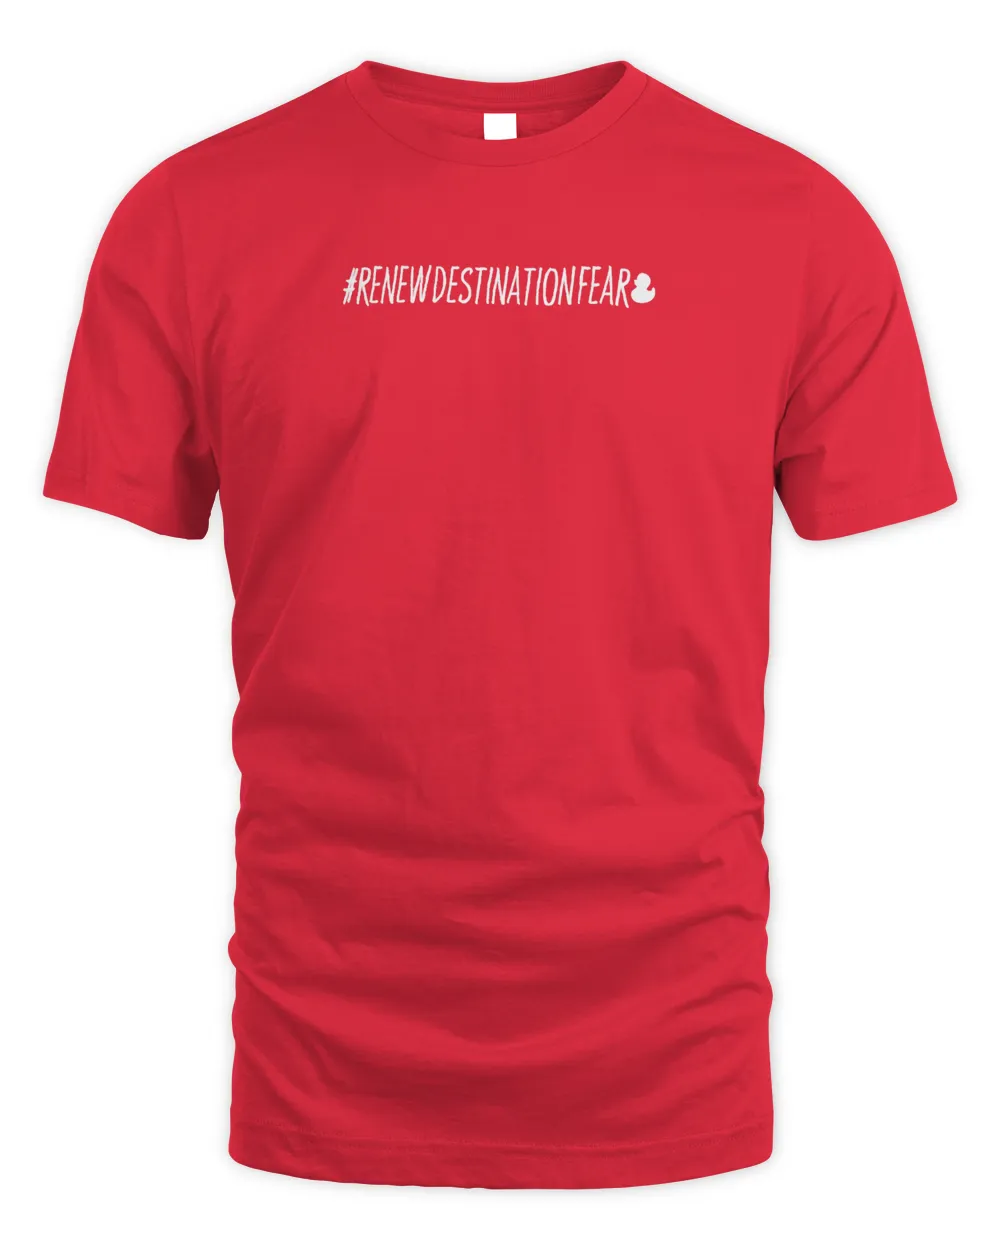 #Renewdestinationfear Tee Shirt